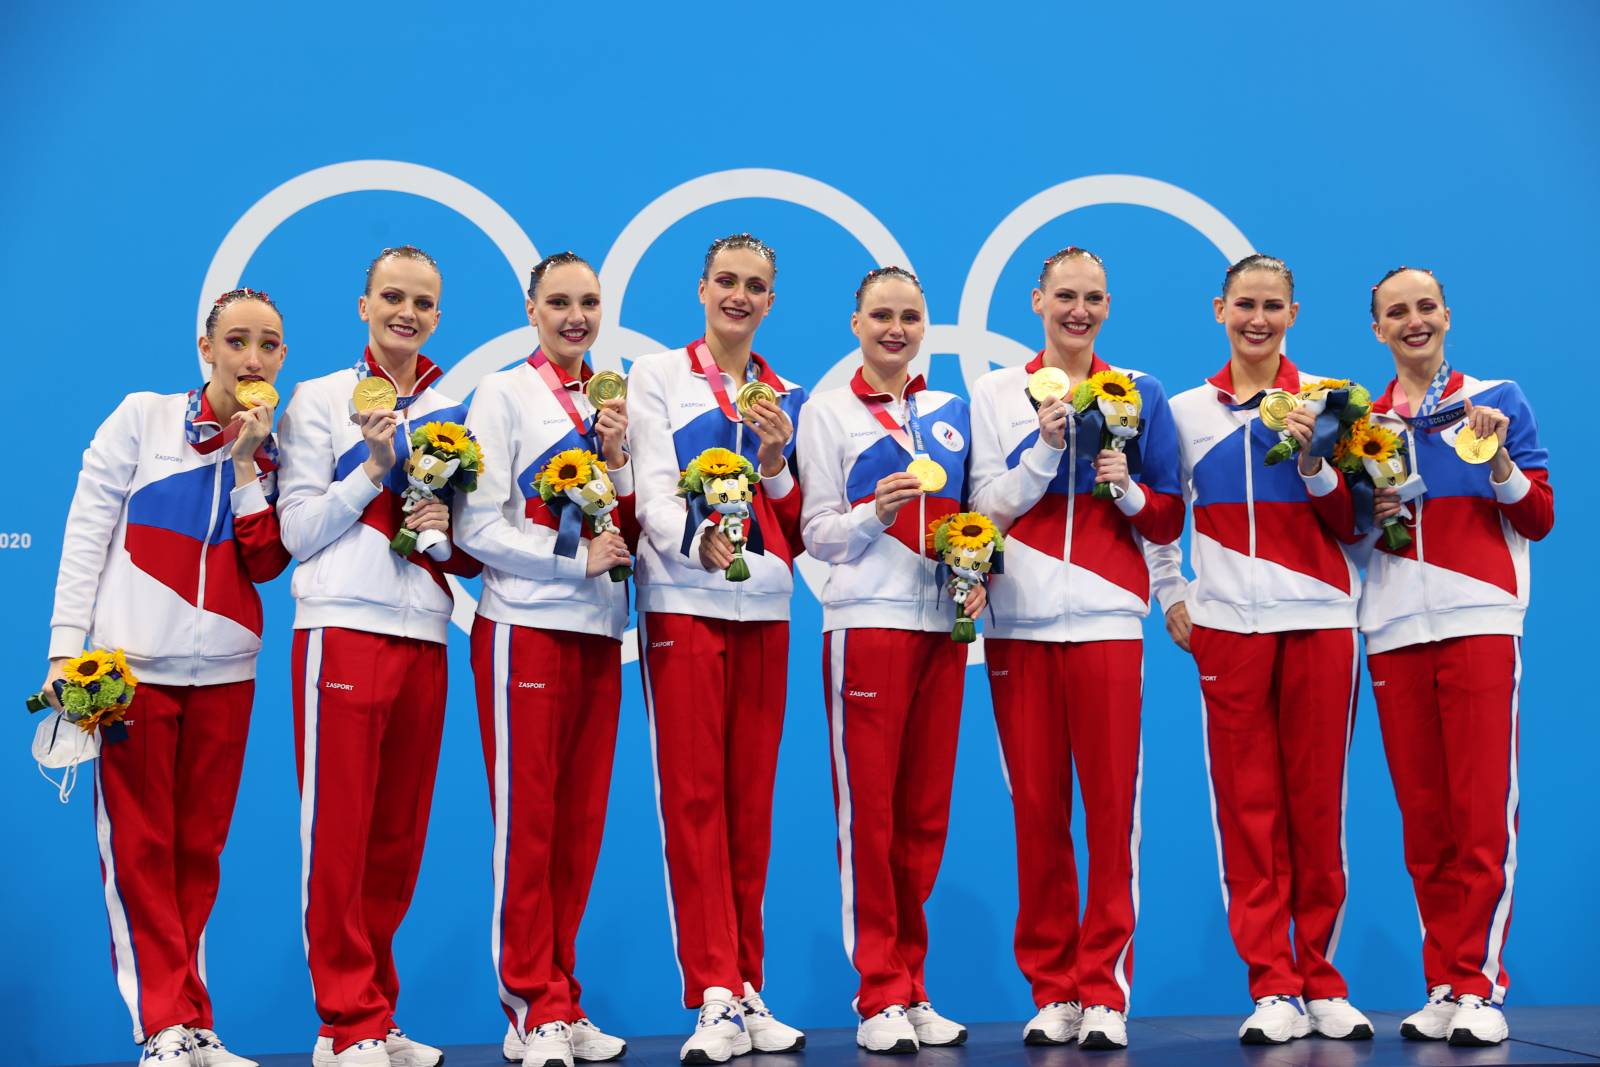 Государство заплатит российским олимпийским медалистам премии на сумму около 300 млн рублей